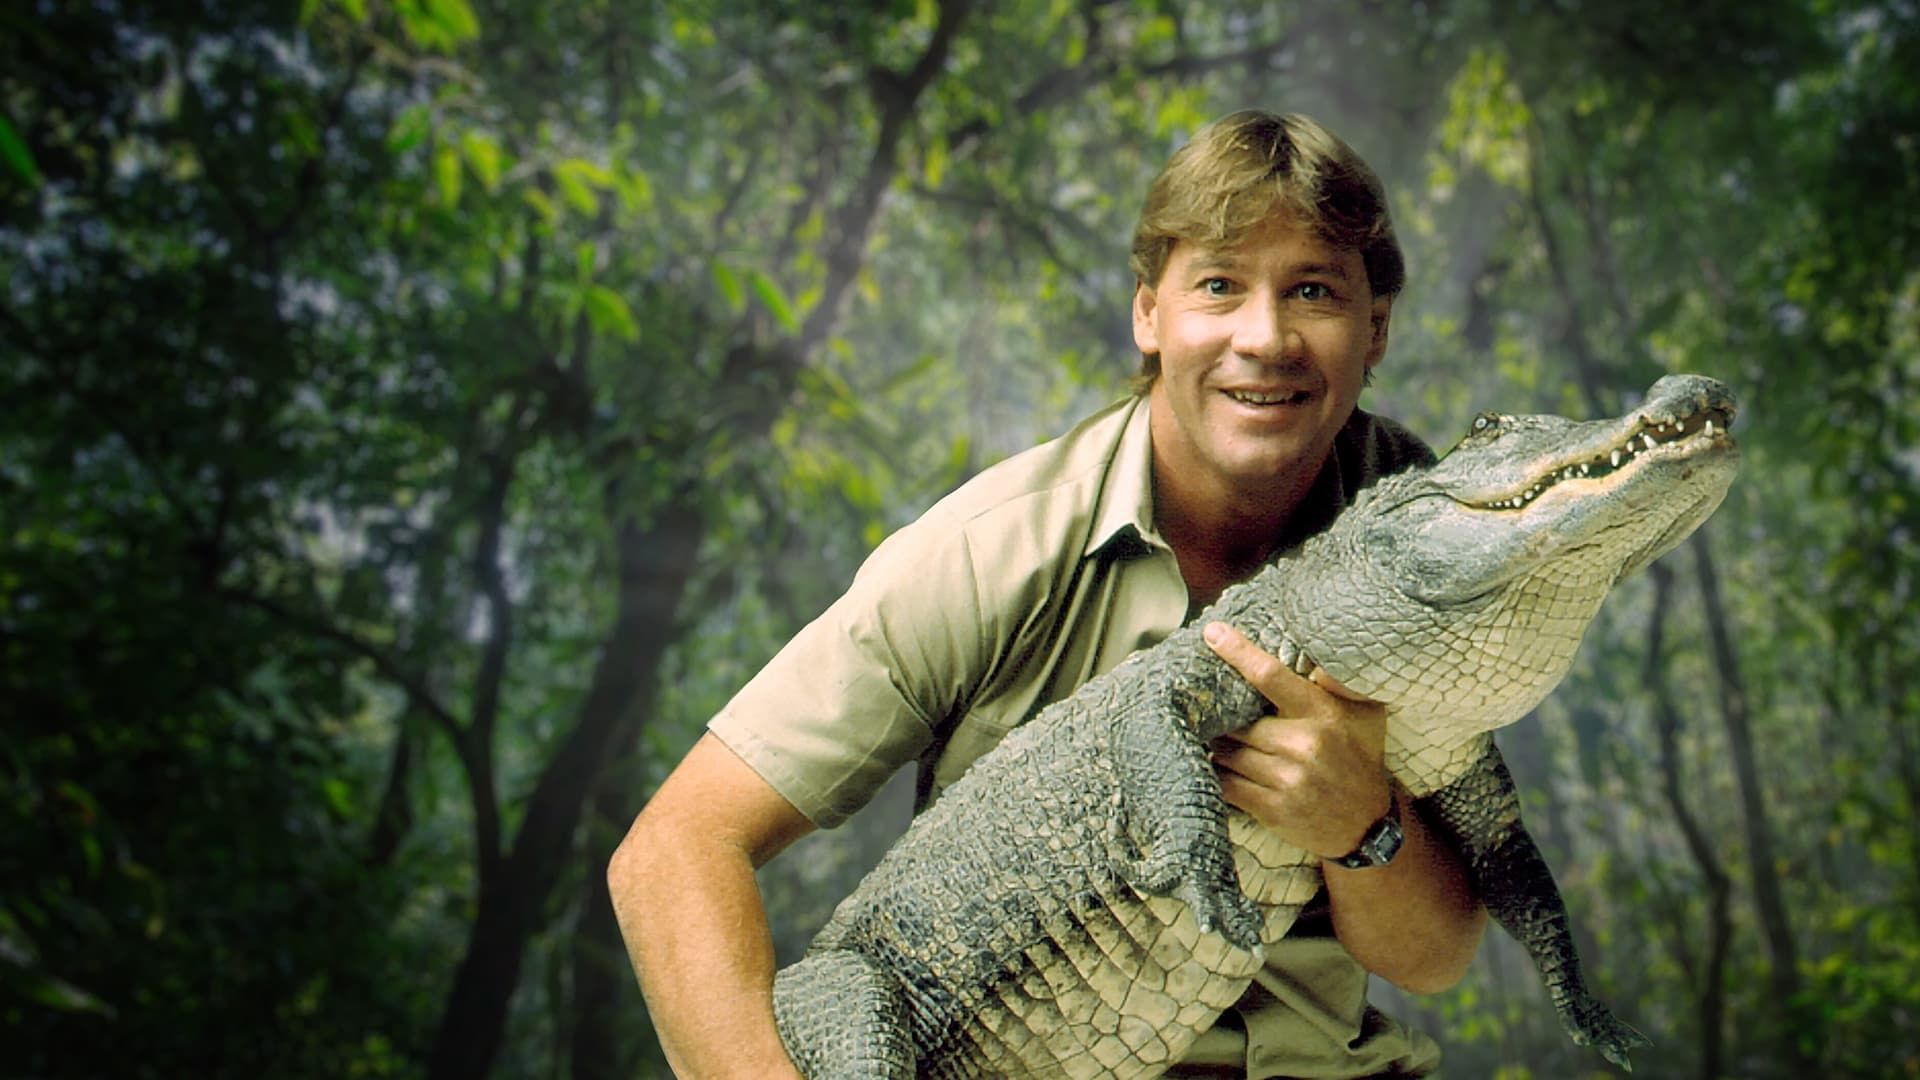 The Crocodile Hunter background